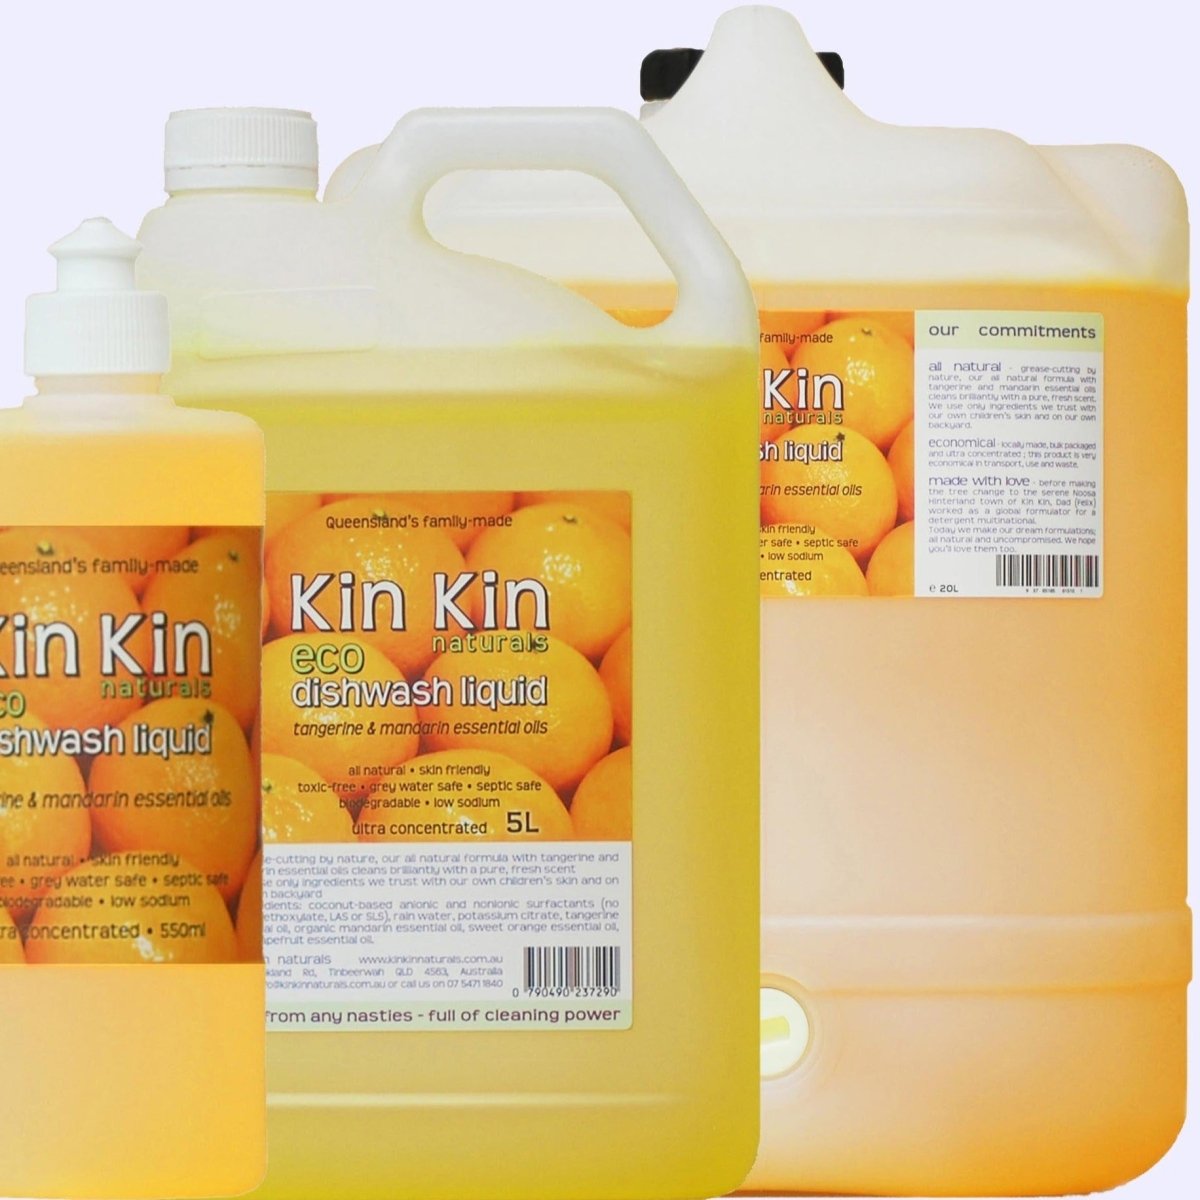 Kin Kin Naturals Dishwashing Liquid Bulk Refill Drums in Tangerine &amp; Mandarin, Urban Revolution.